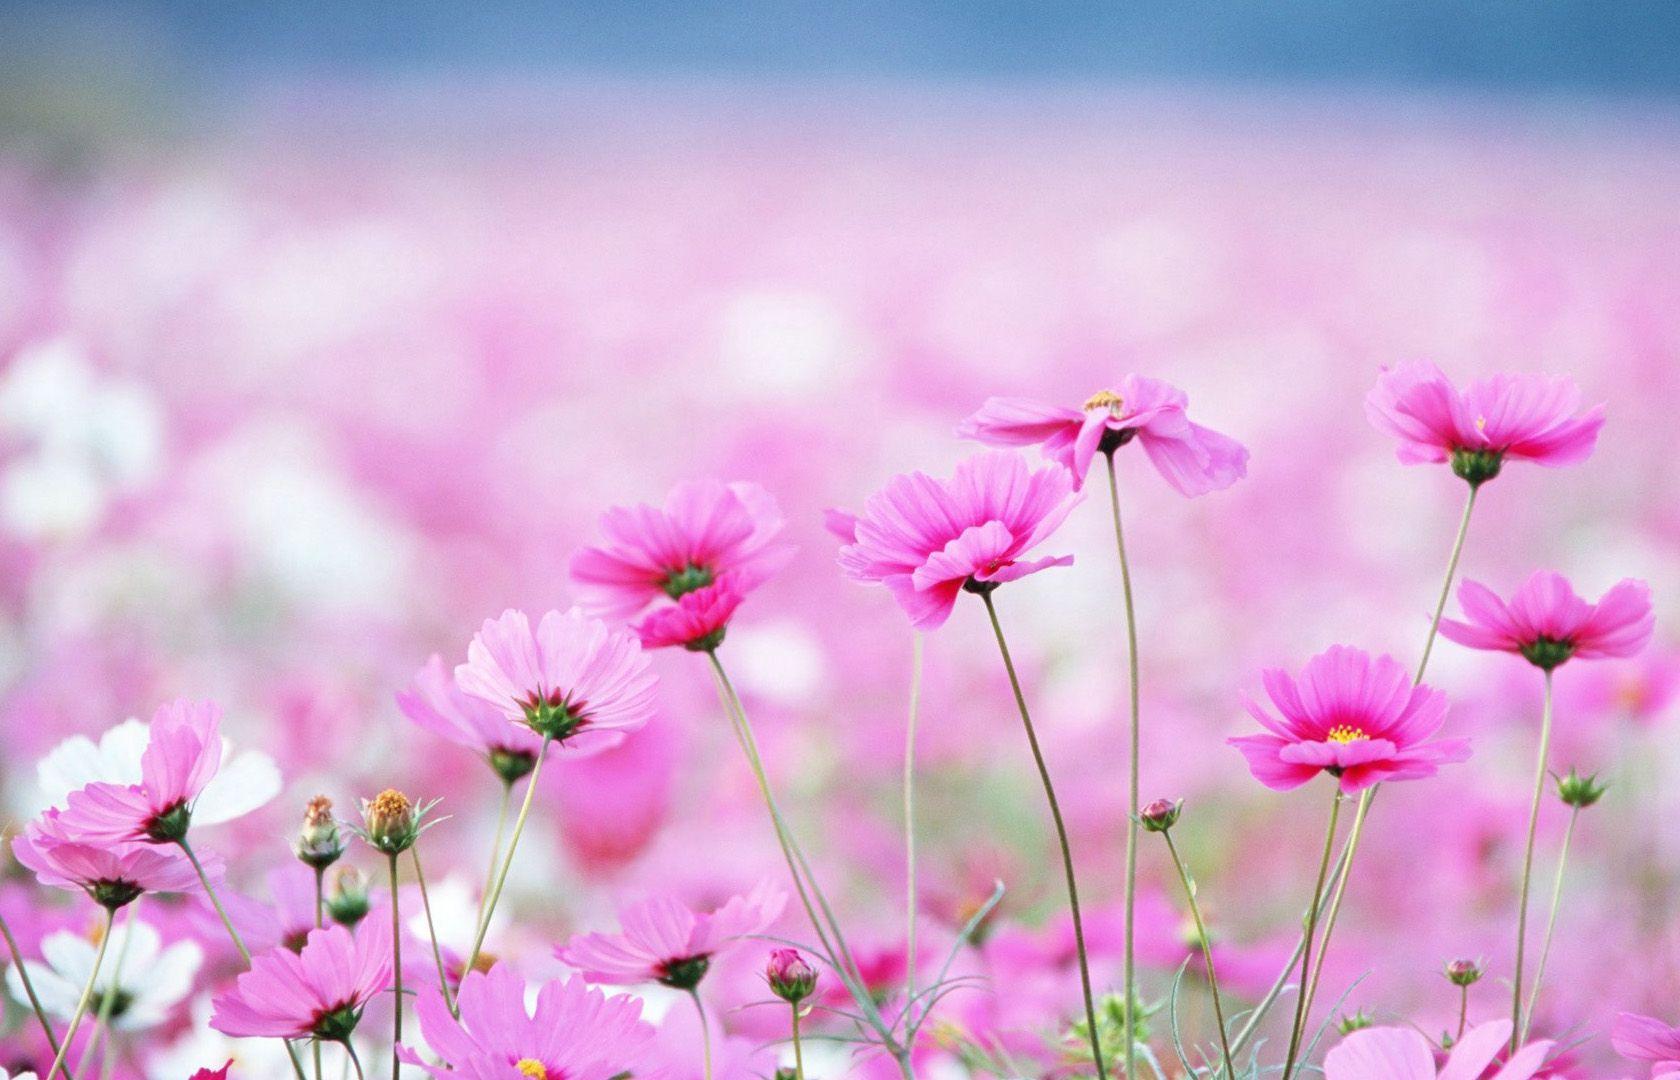 Best Pink cosmos closeup hot pink flower Wallpaper (8 + Image)